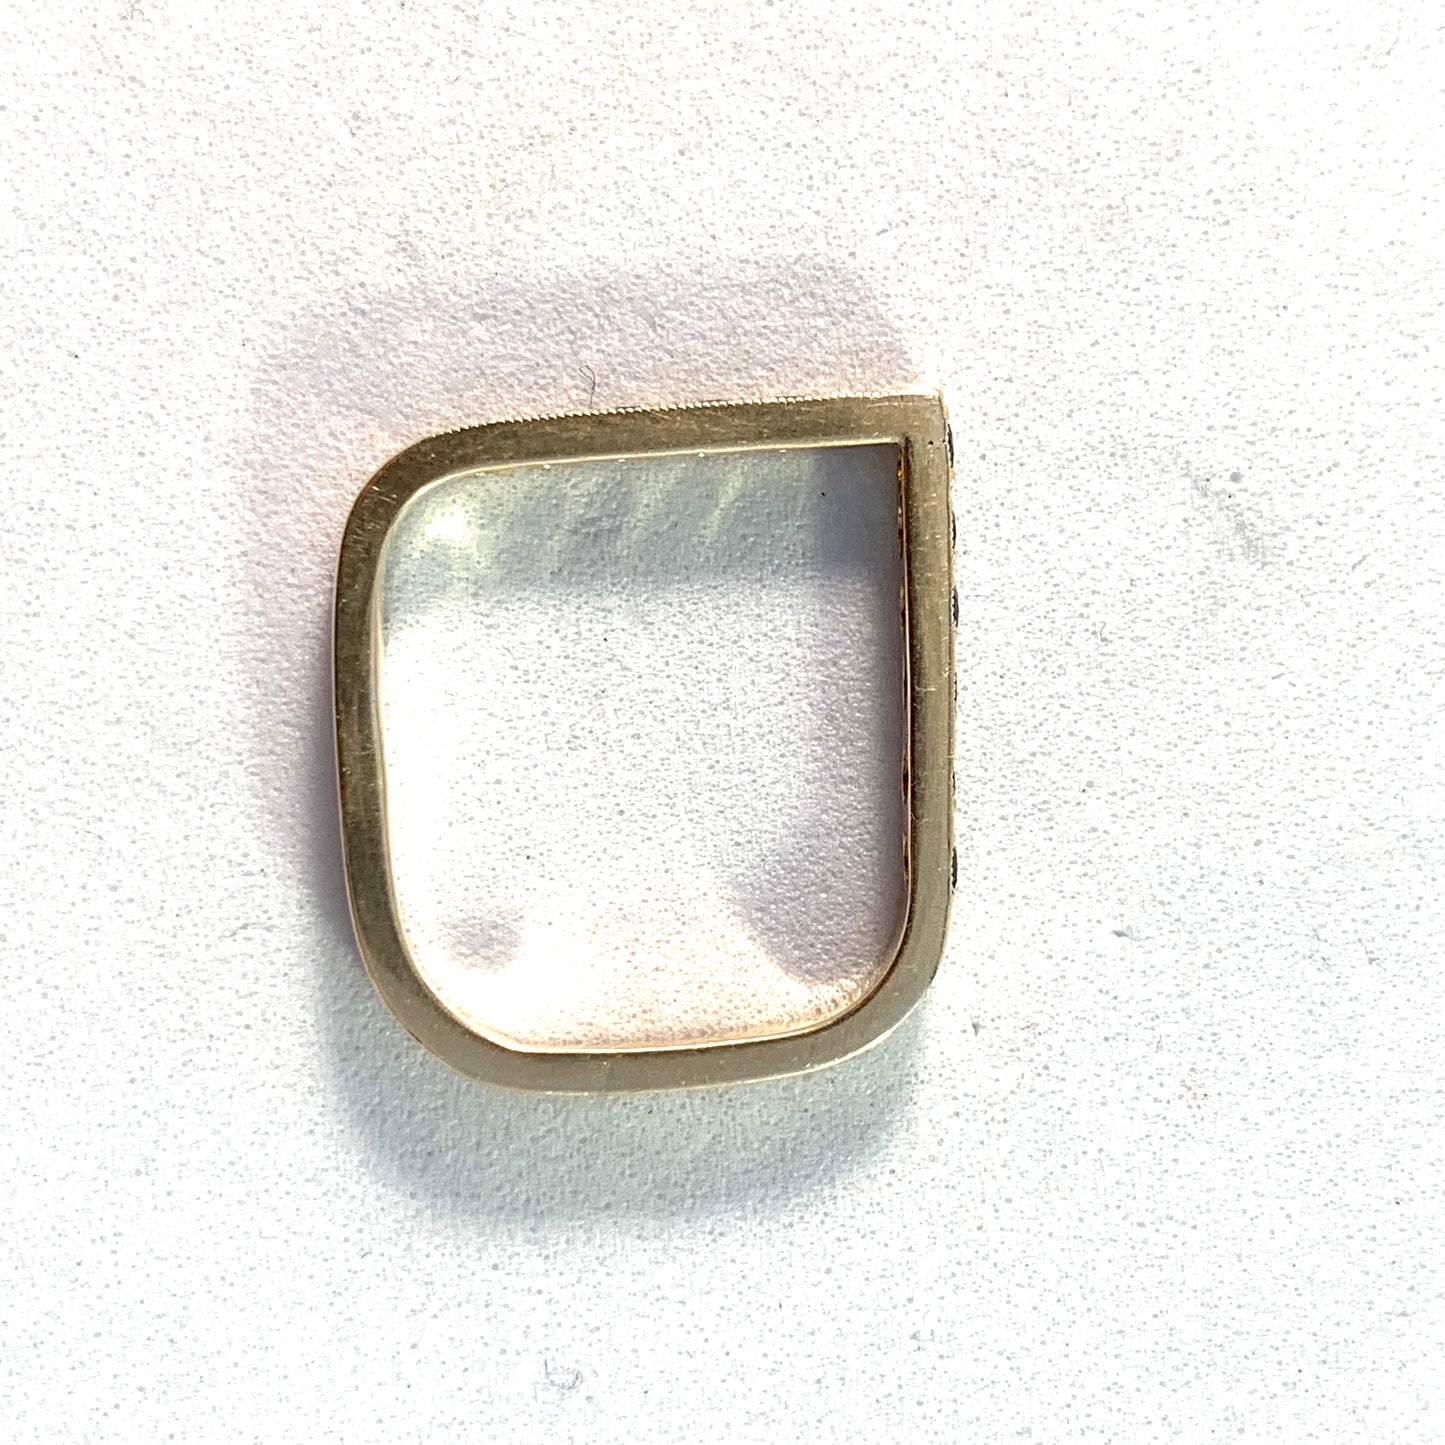 Vintage 14k Gold Emerald Sapphire Ring.